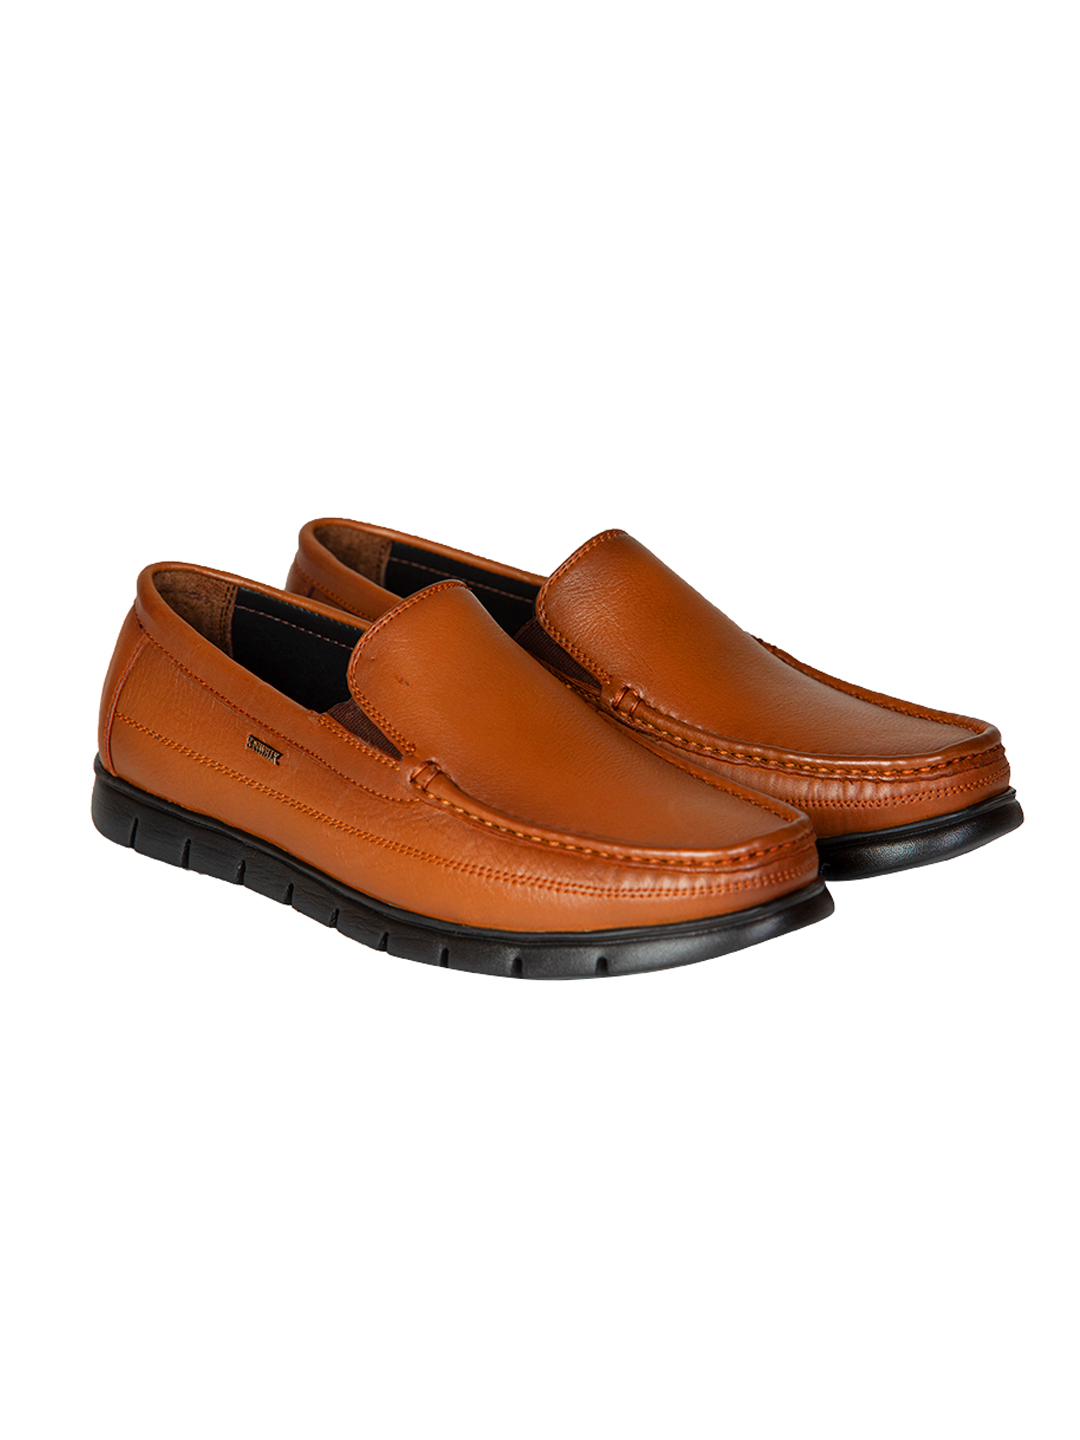 Buy Von Wellx Germany Comfort Tan Zion Shoes Online in Gurgaon